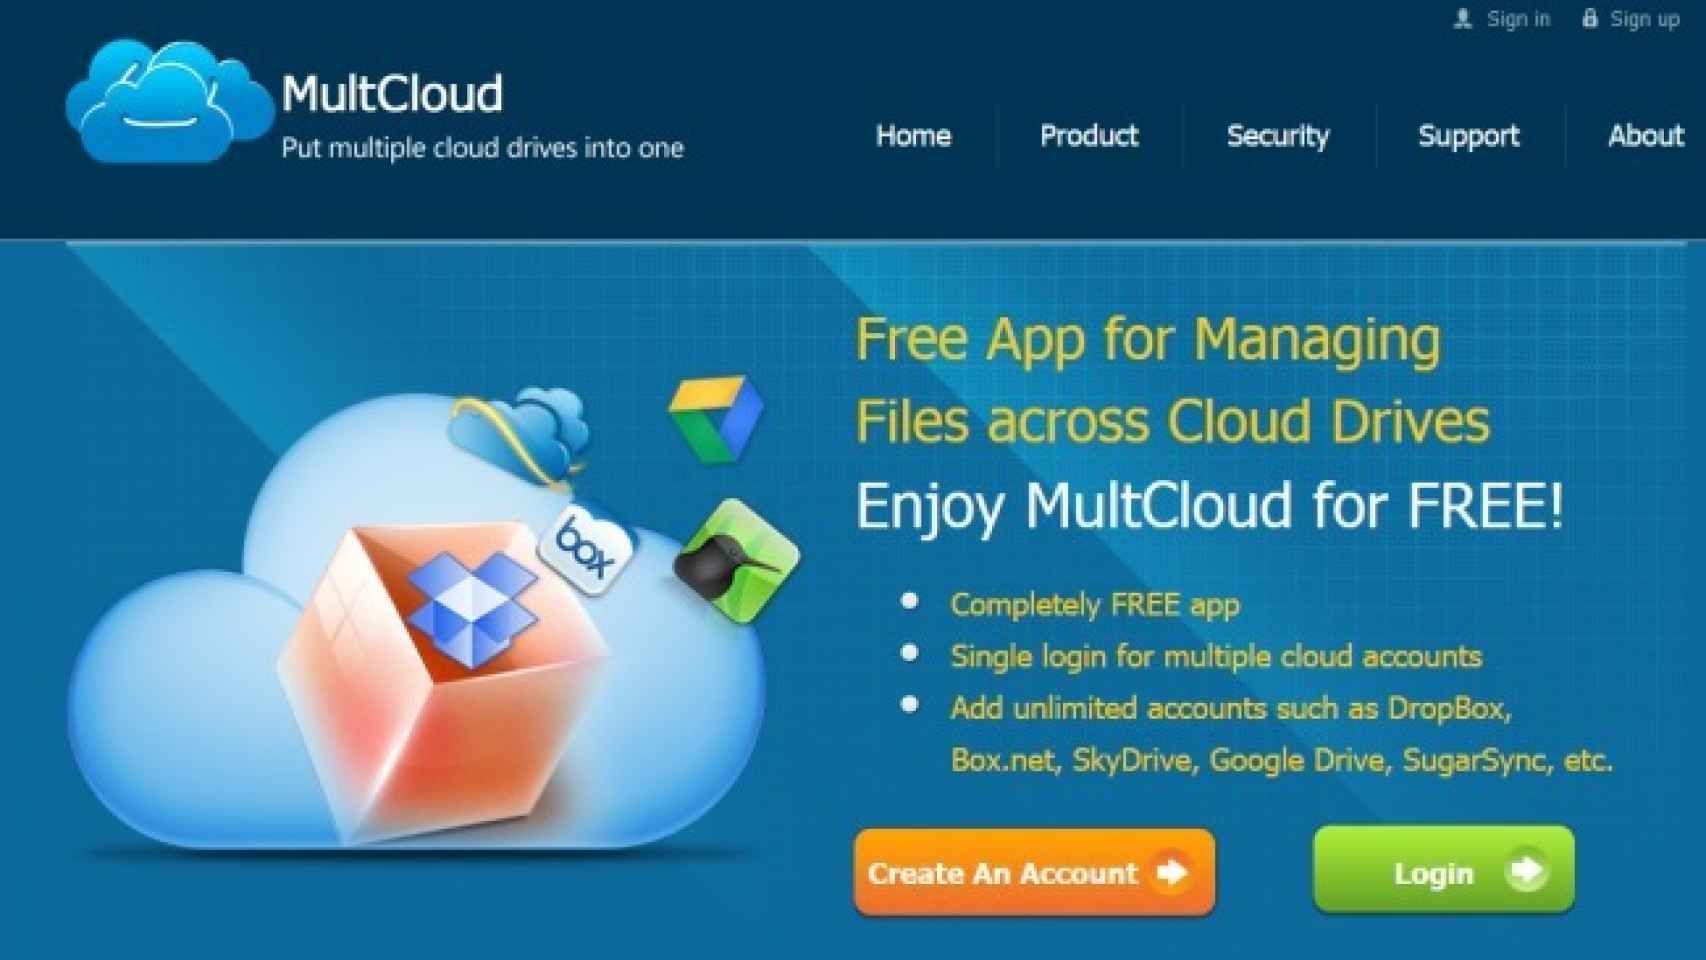 MultCloud-one-app-for-simultaneous-management-of-your-multiple-cloud-drives